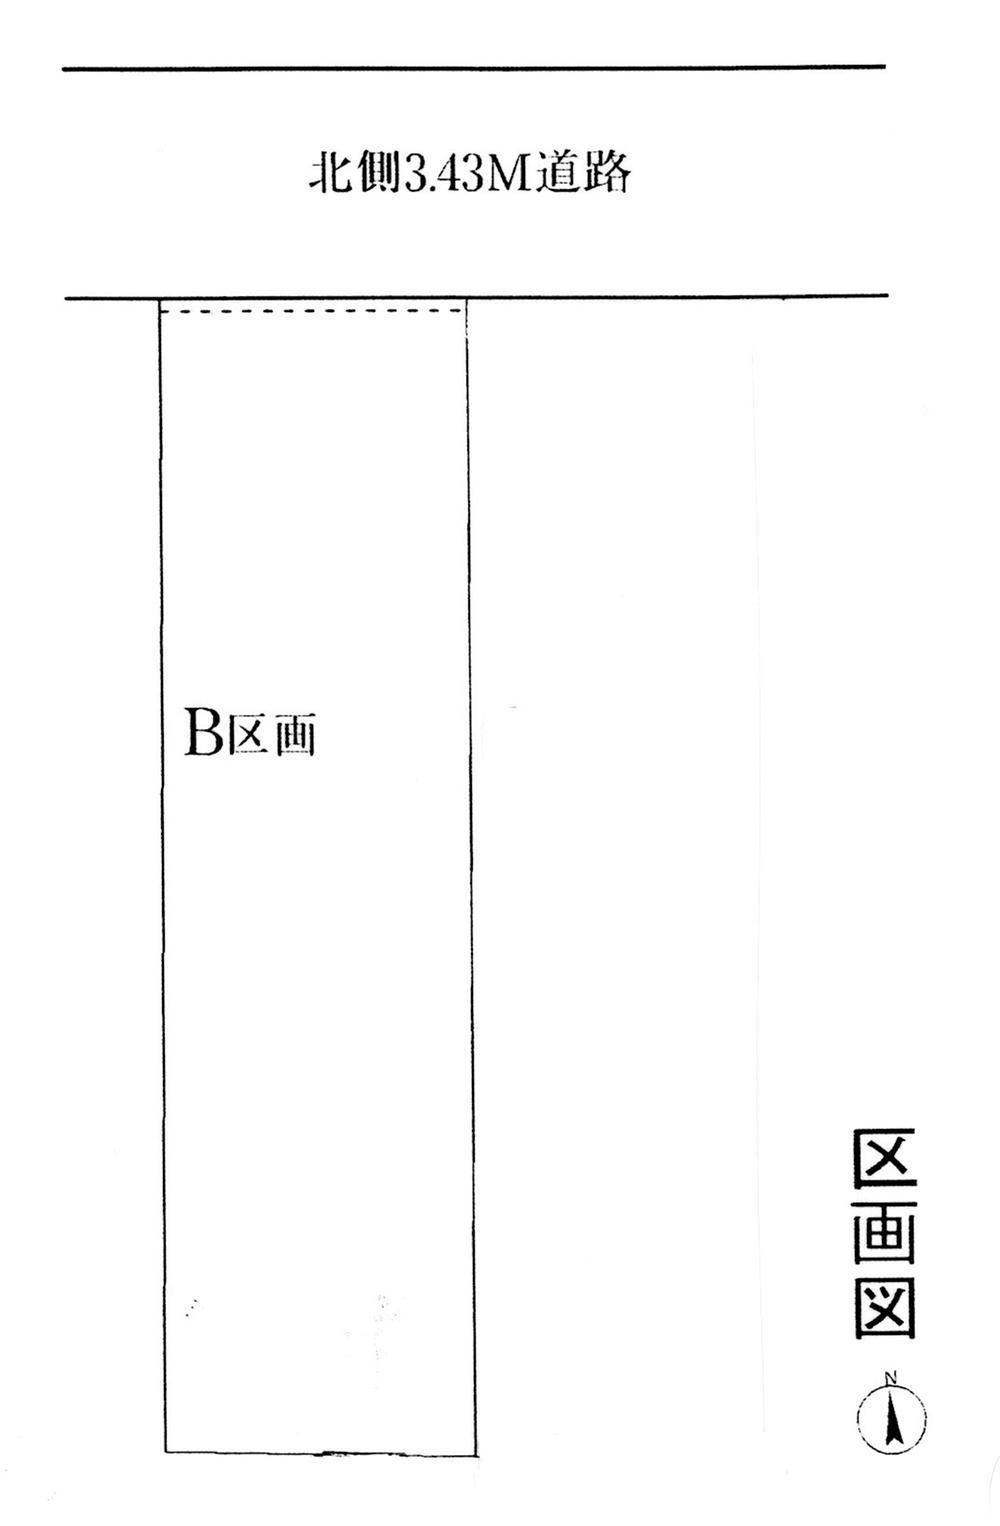 Compartment figure. Land price 68,800,000 yen, Land area 92.32 sq m